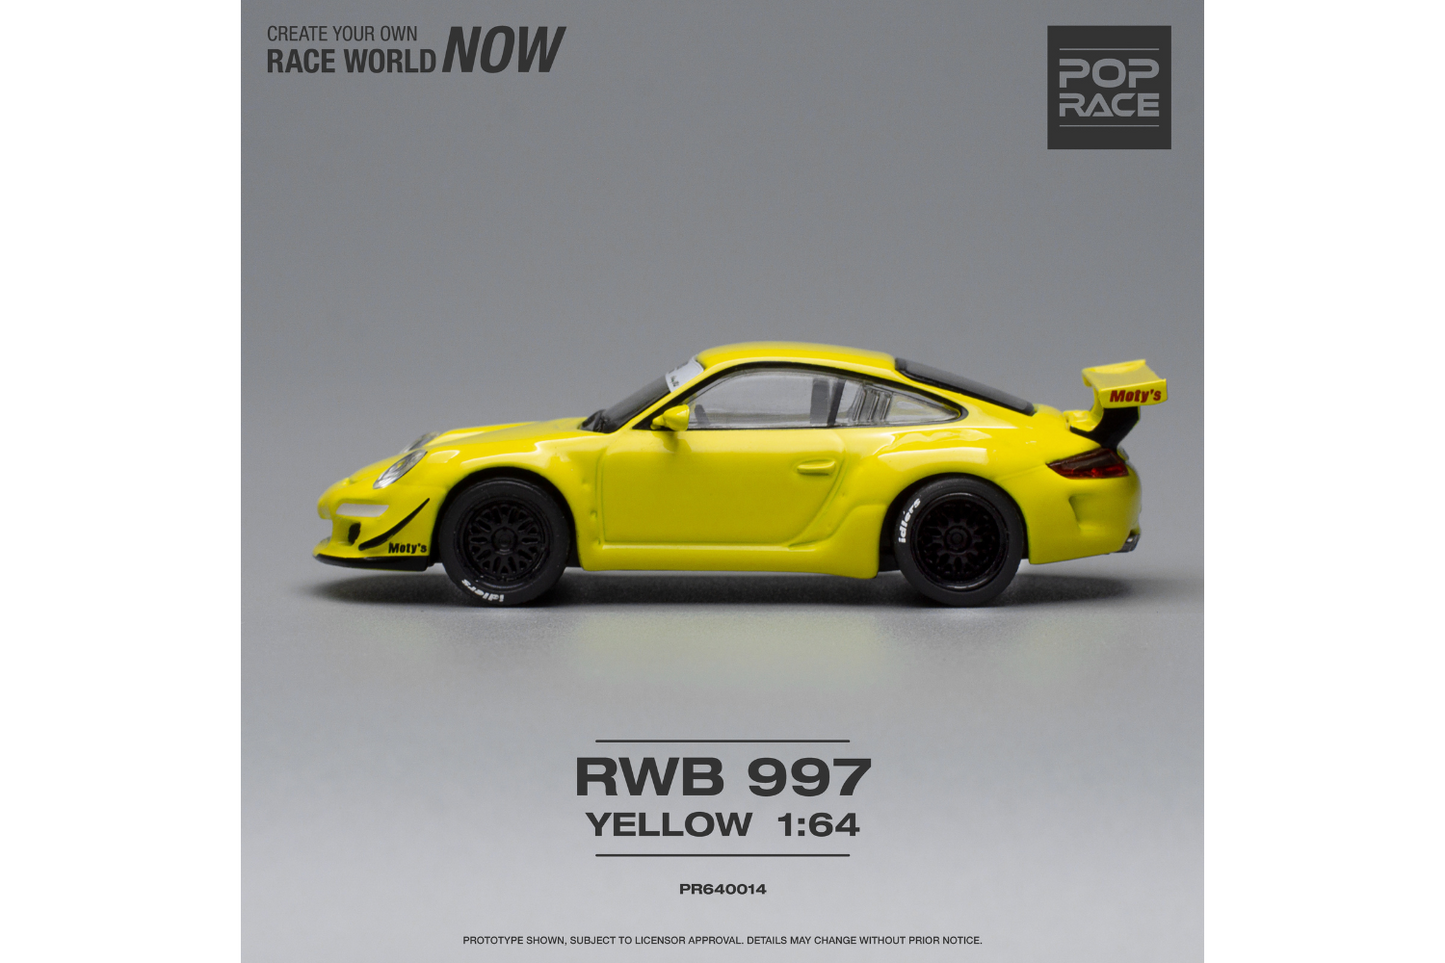 Pop Race 1/64 Porsche 911 RWB997 in Yellow